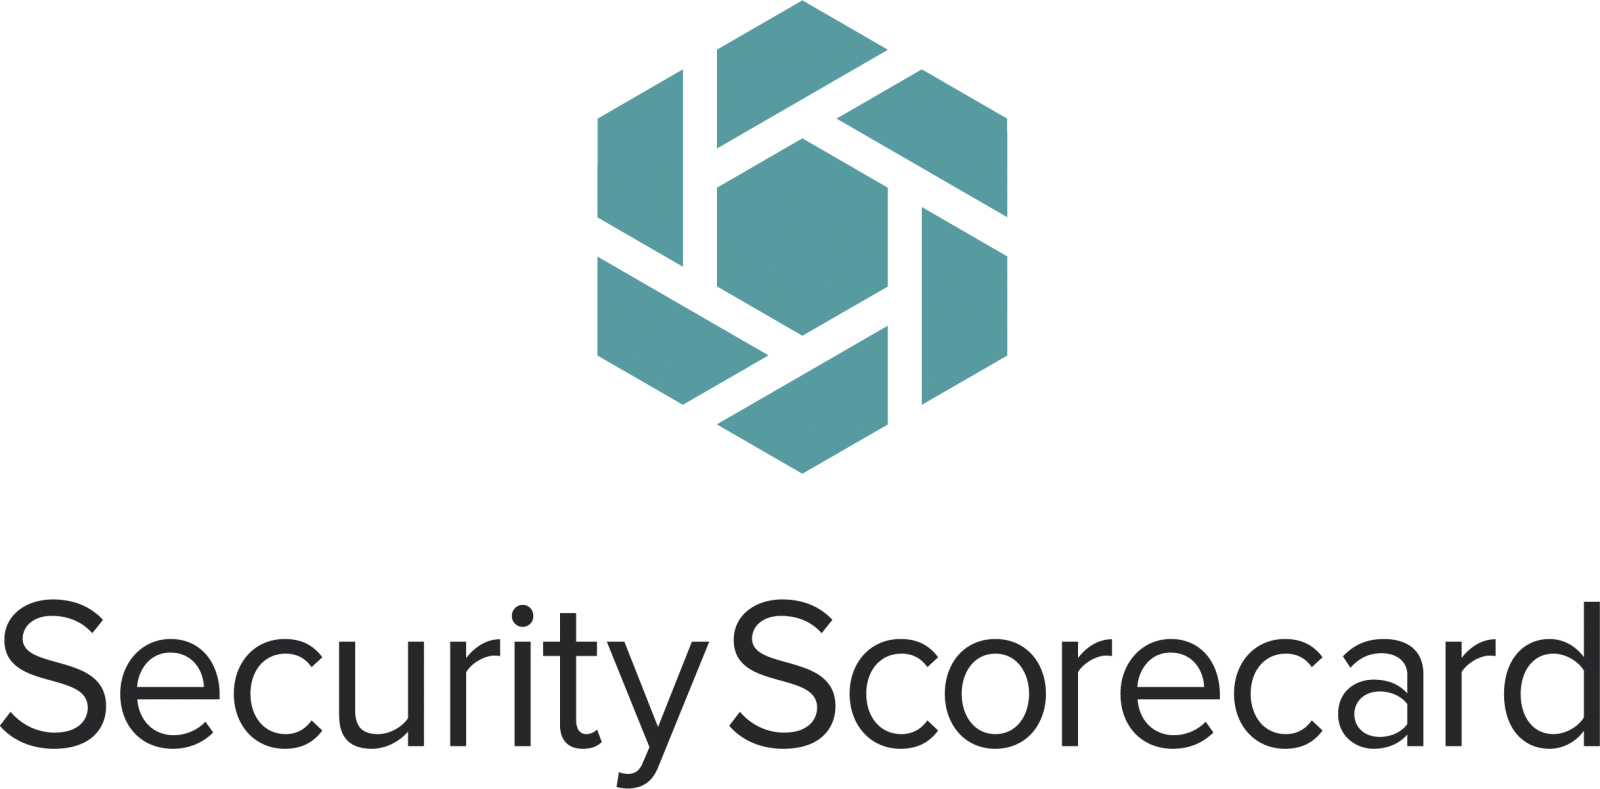 Security scorecard